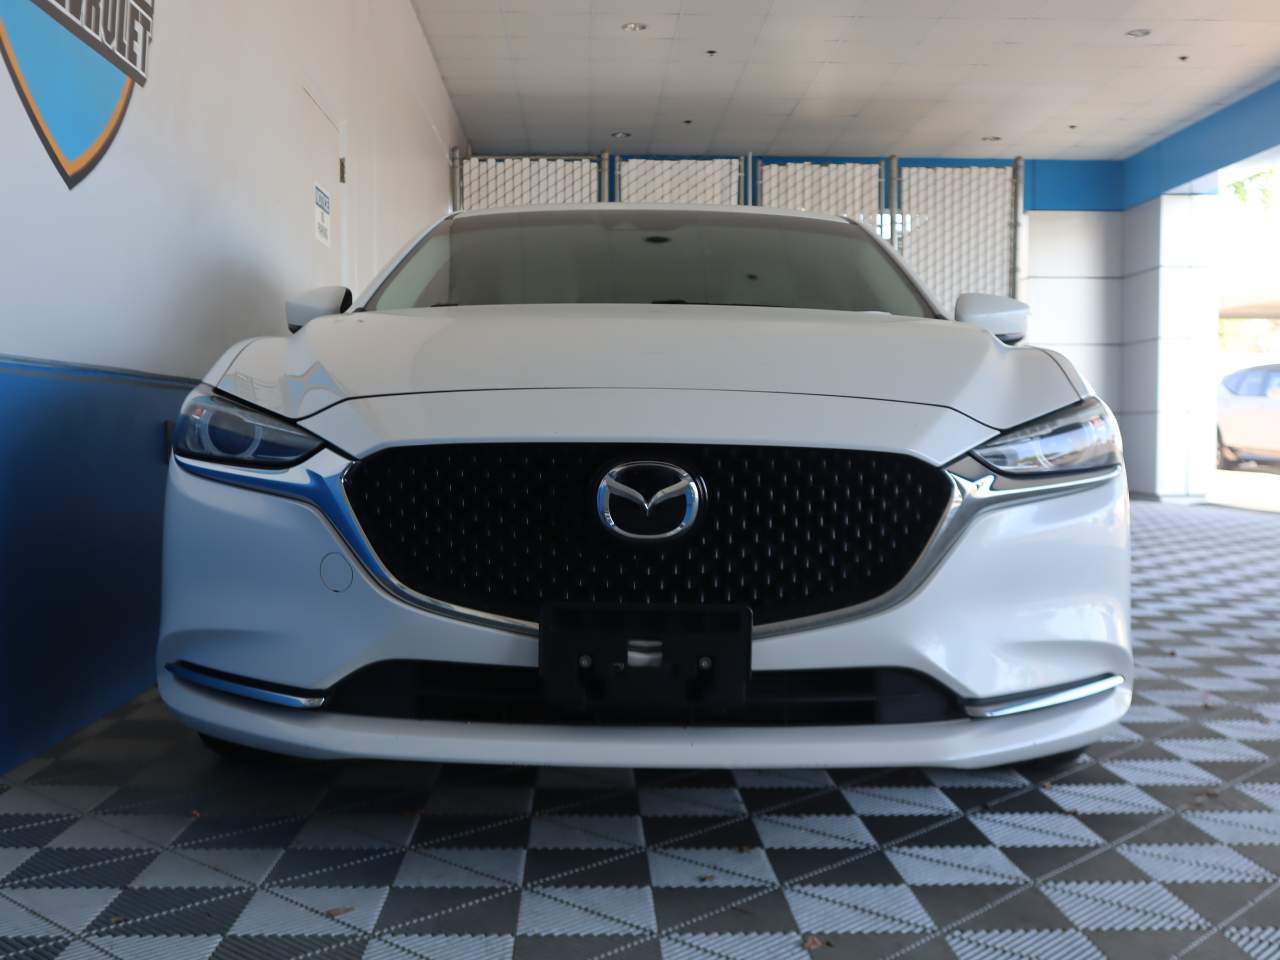 2018 Mazda6 Grand Touring Reserve